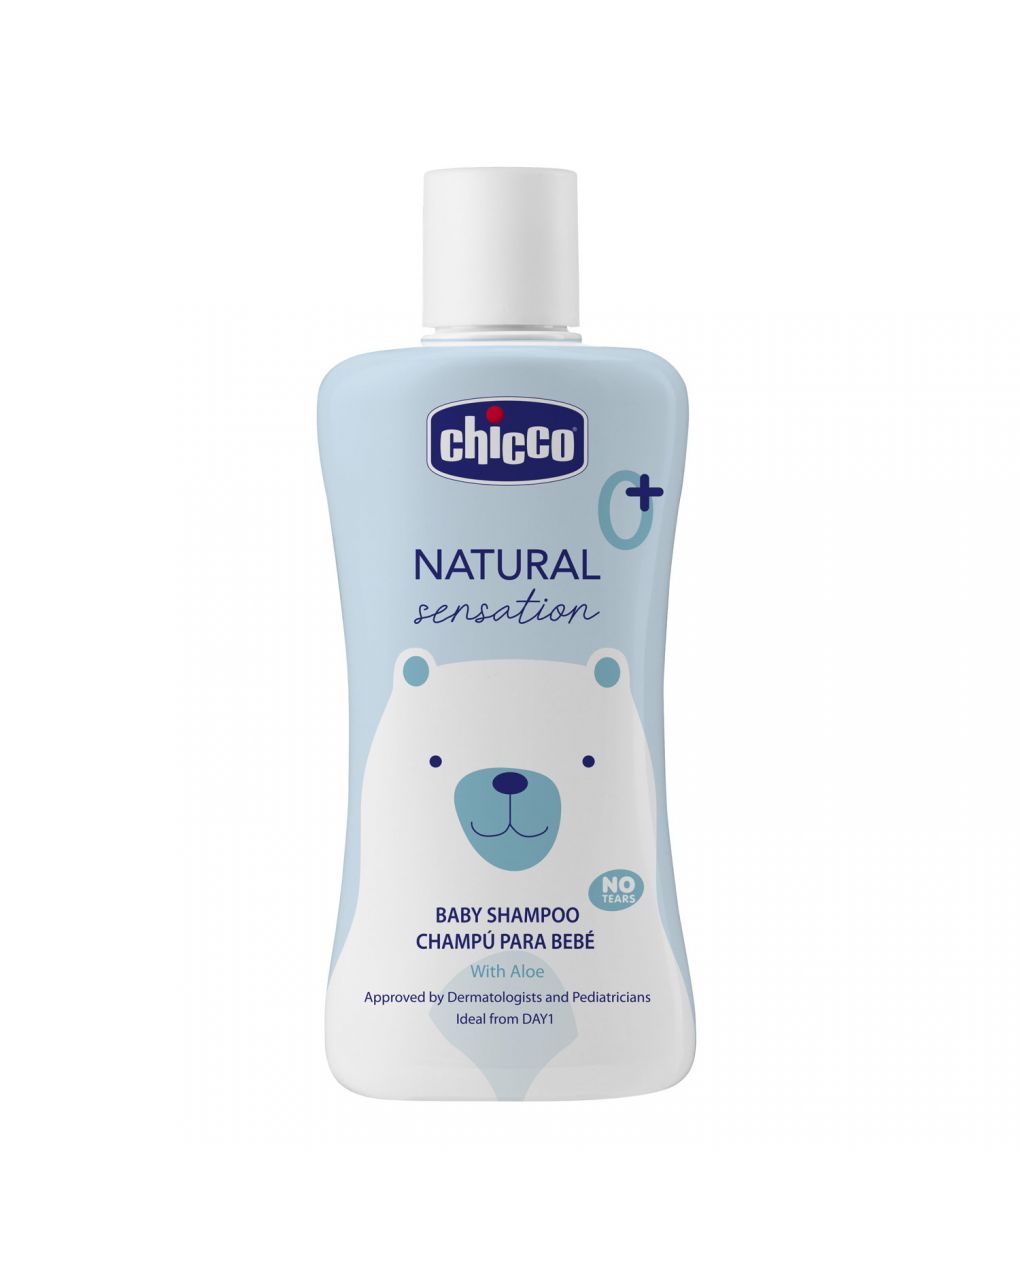 Baby shampoo natural sensation 200ml - chicco